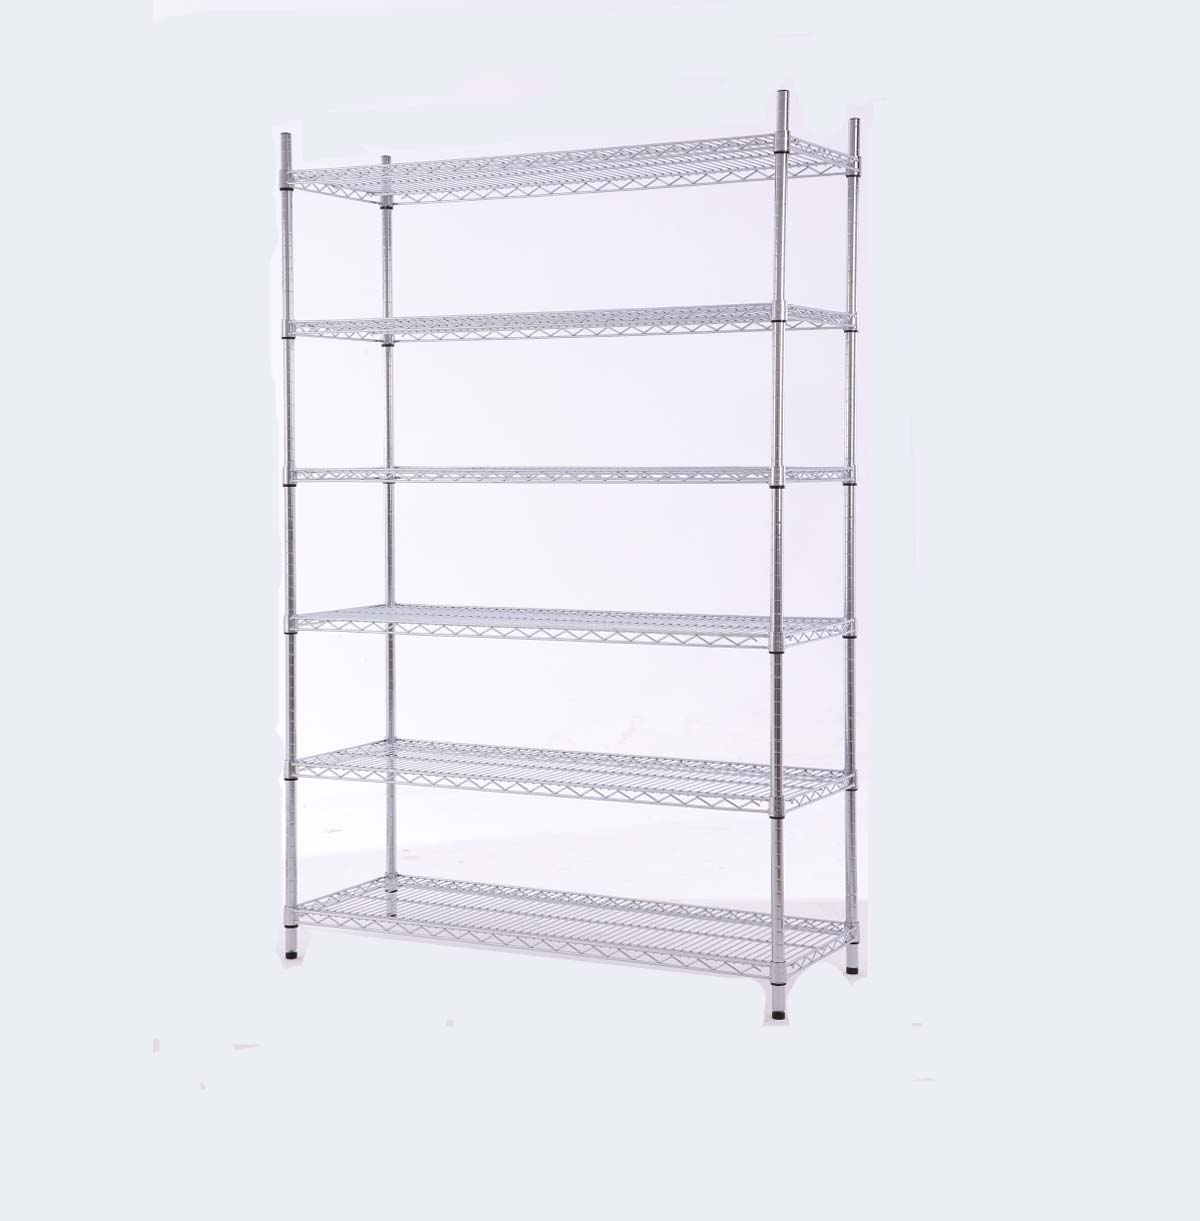 Design principles and characteristics of storage shelves